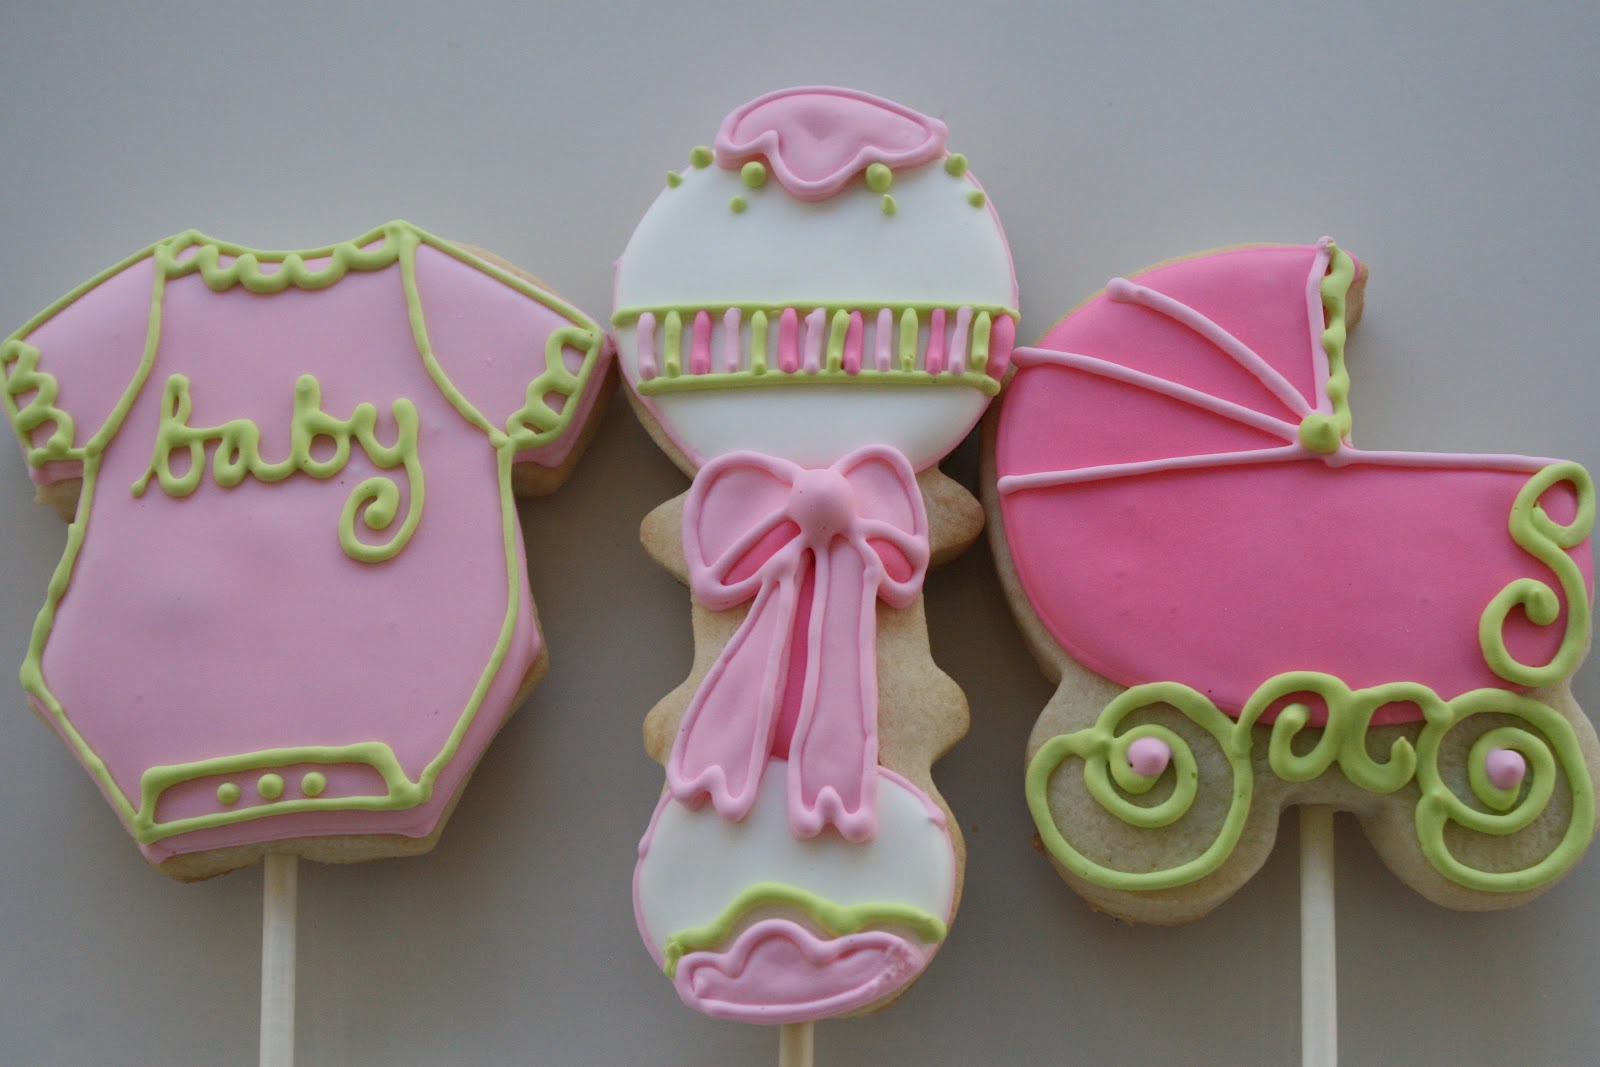 Custom Cookies, Cupcakes and Cake: Decorated Cookies